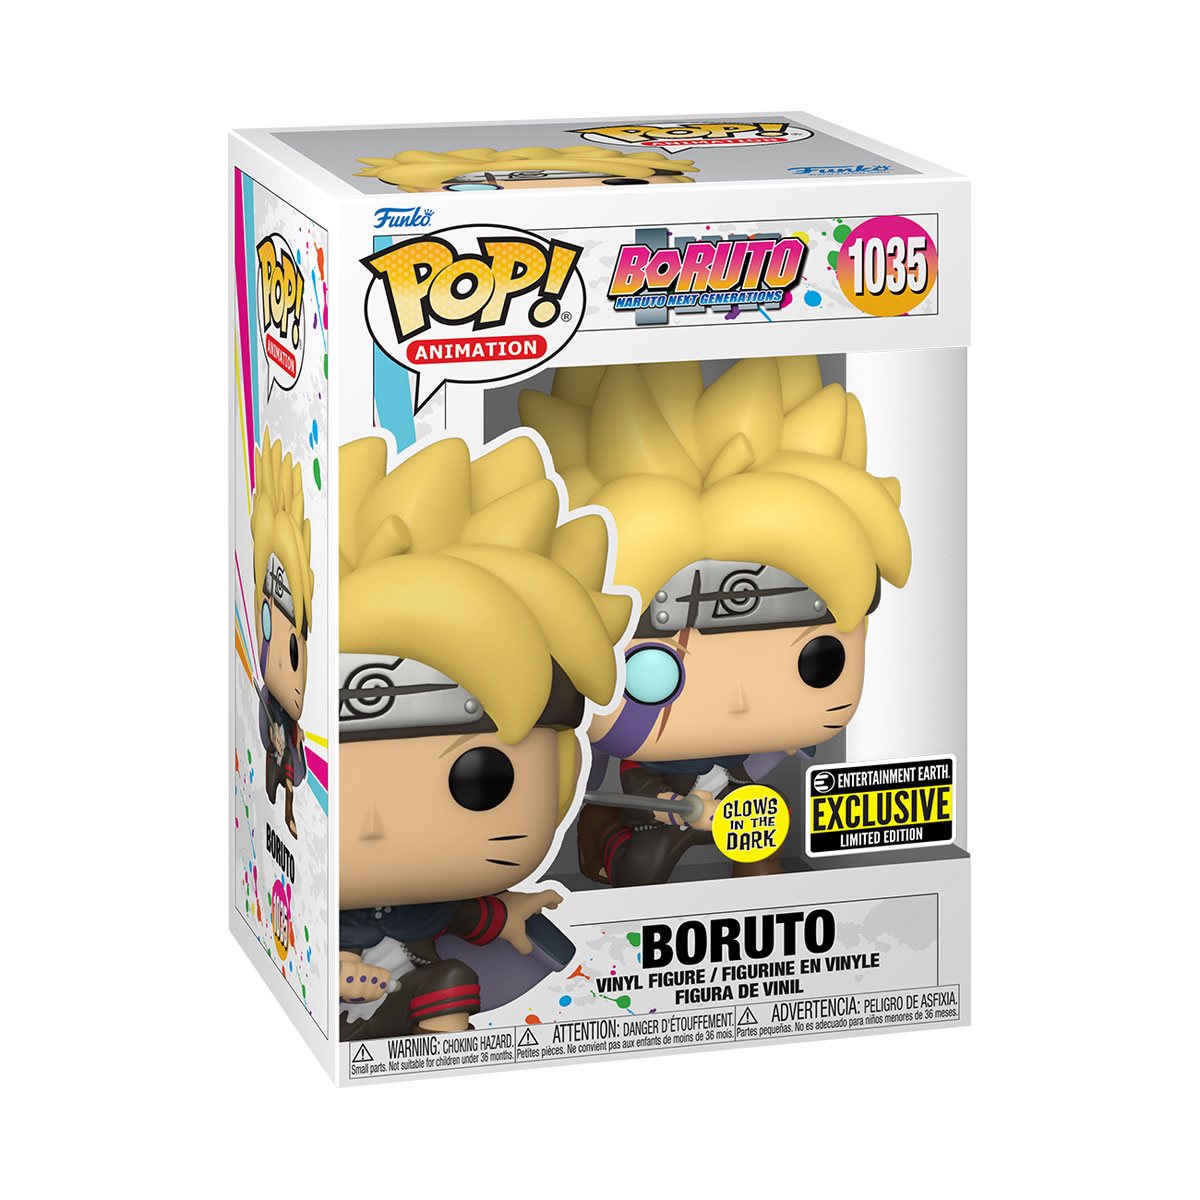 Pop! Animation1035 Boruto Naruto Next Generations: Boruto with Marks (Glow In The Dark) Exclusive